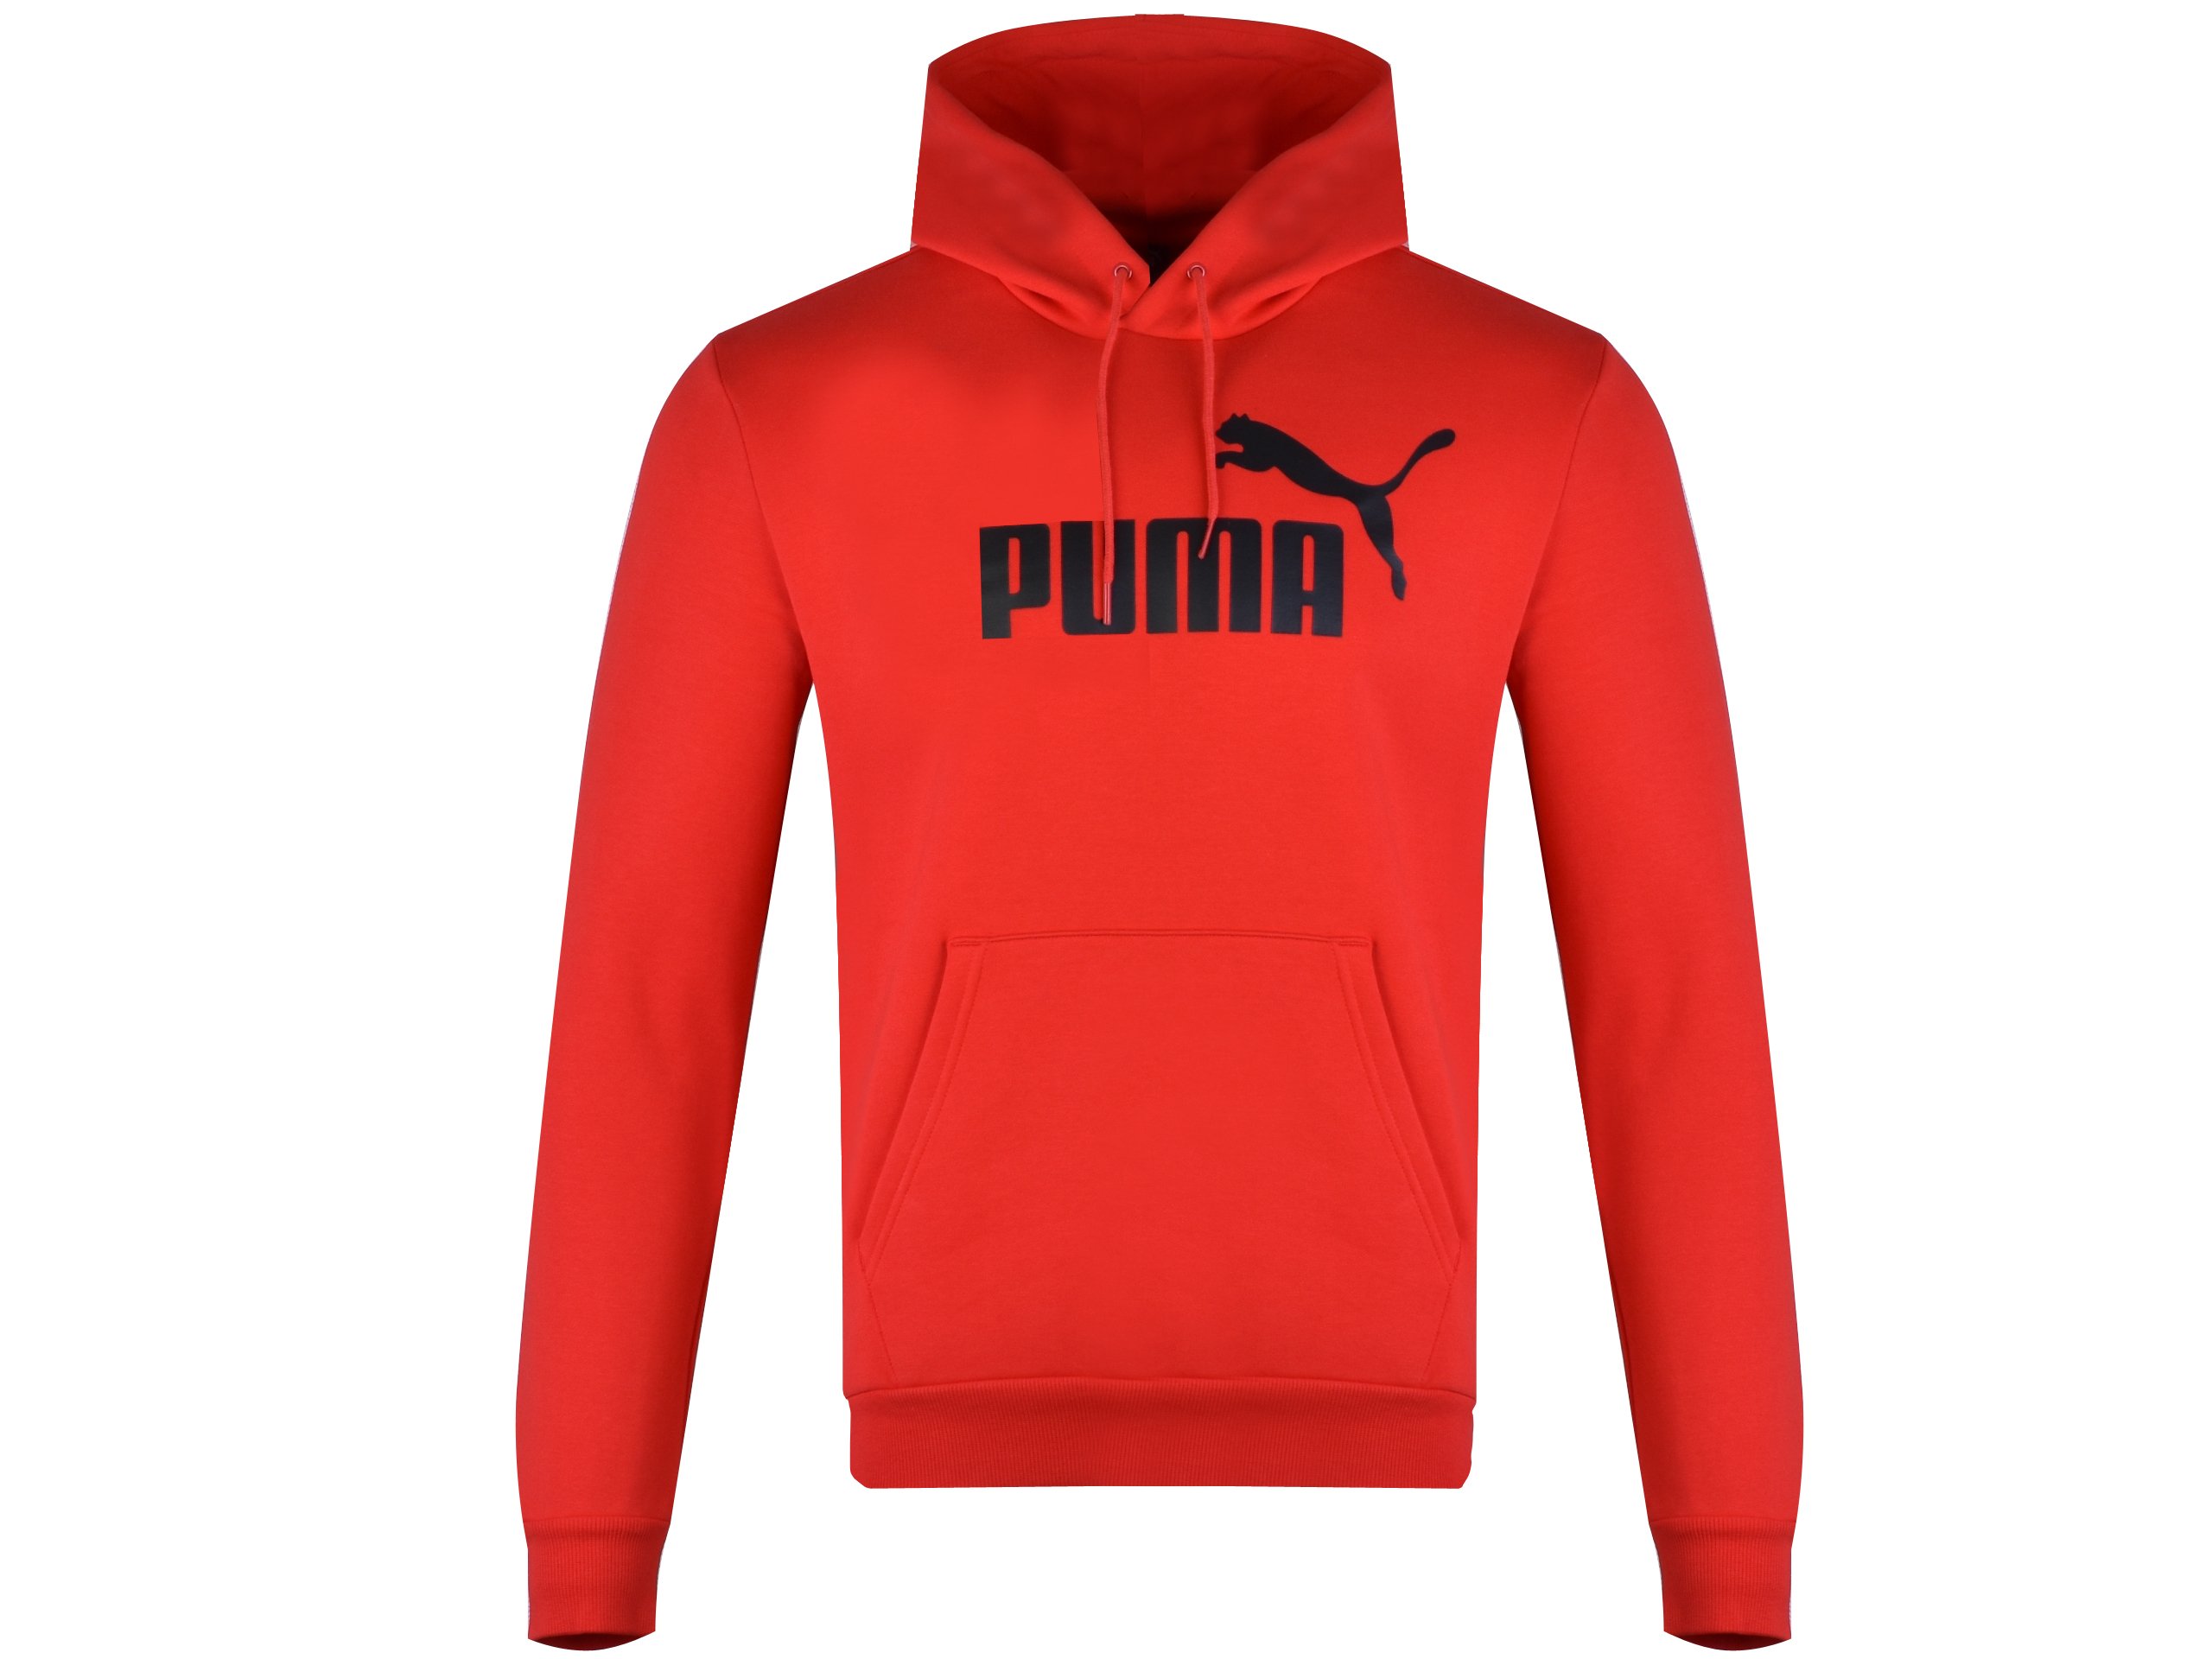 Sport a of trusted 851743-05 branded Puma - | - FL Hoody - - ESS footwear Czerwony Hoodie sports Kicks Red Logo | supplier Big